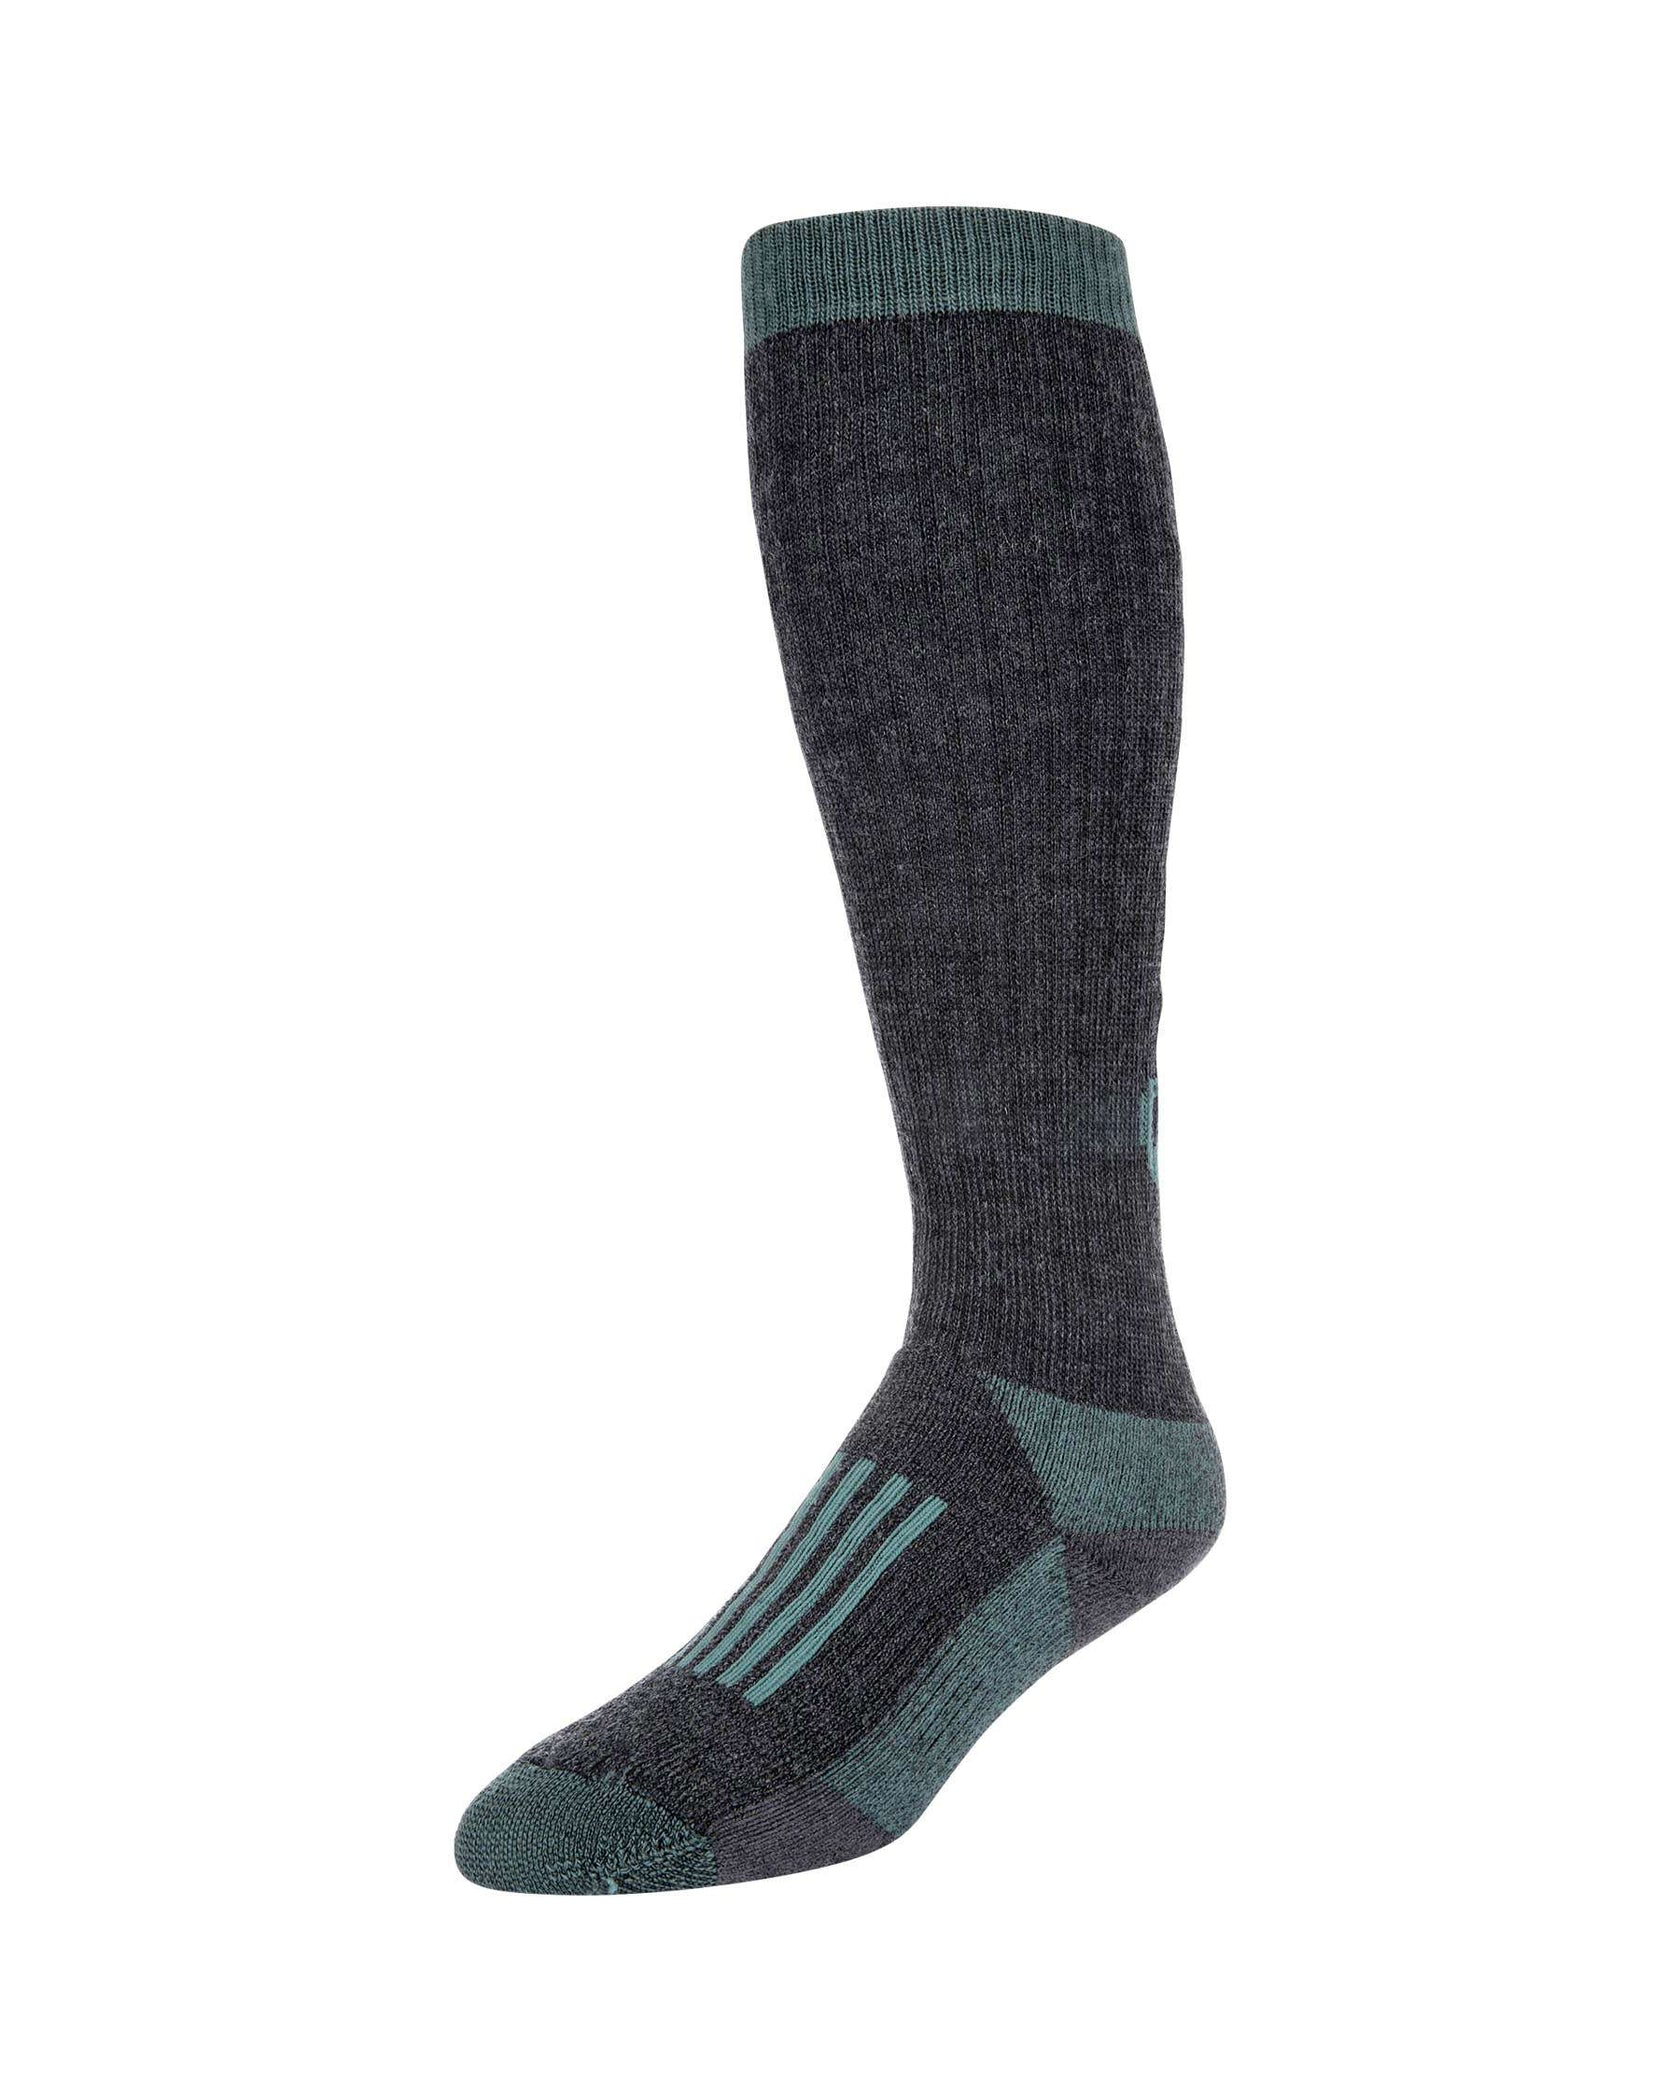 Women's Merino Thermal OTC Socks